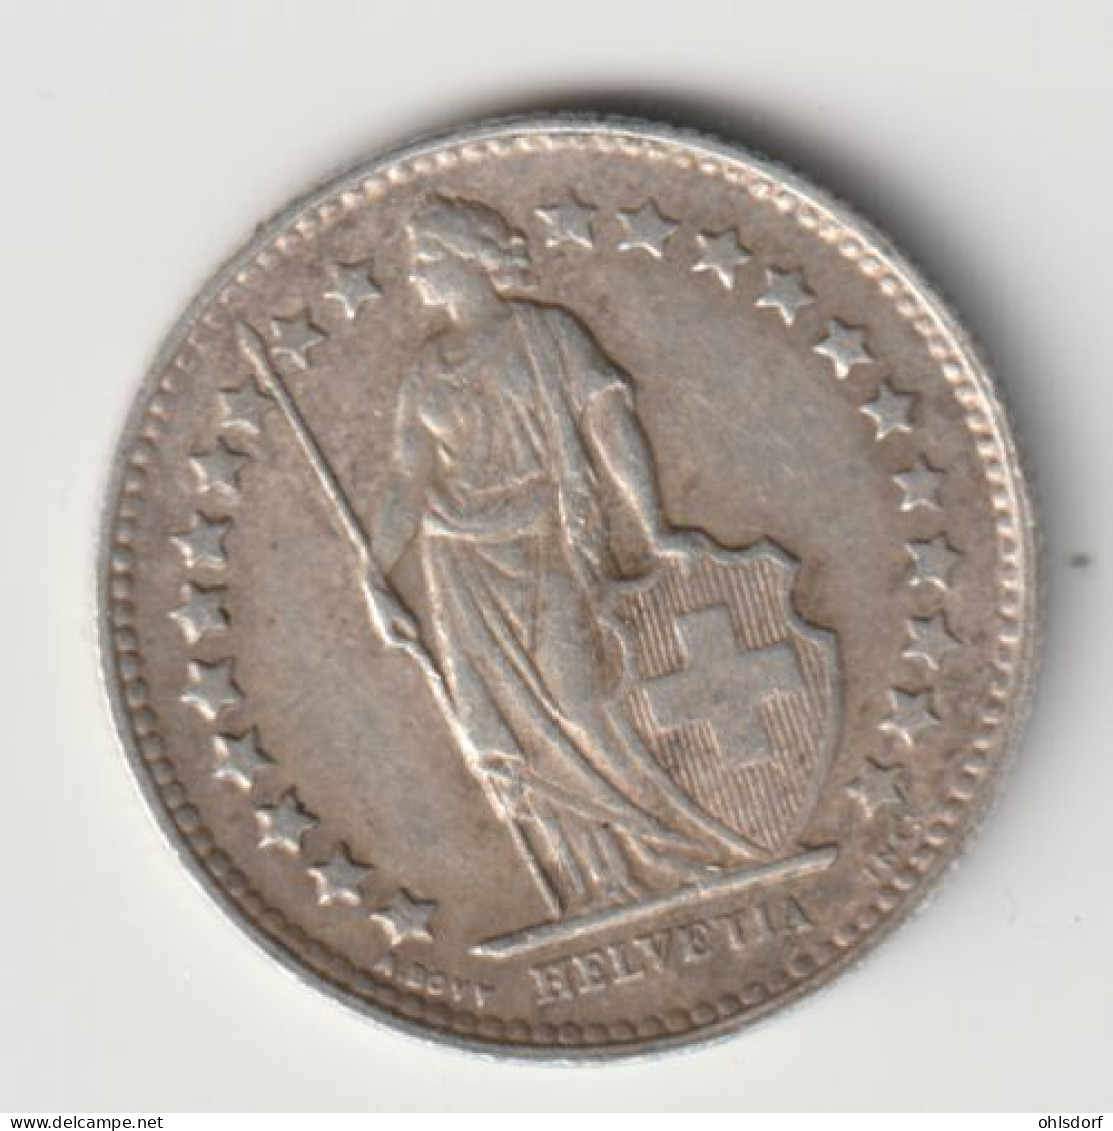 HELVETIA 1952: 1/2 Fr., Silver, KM 23 - 1/2 Franc